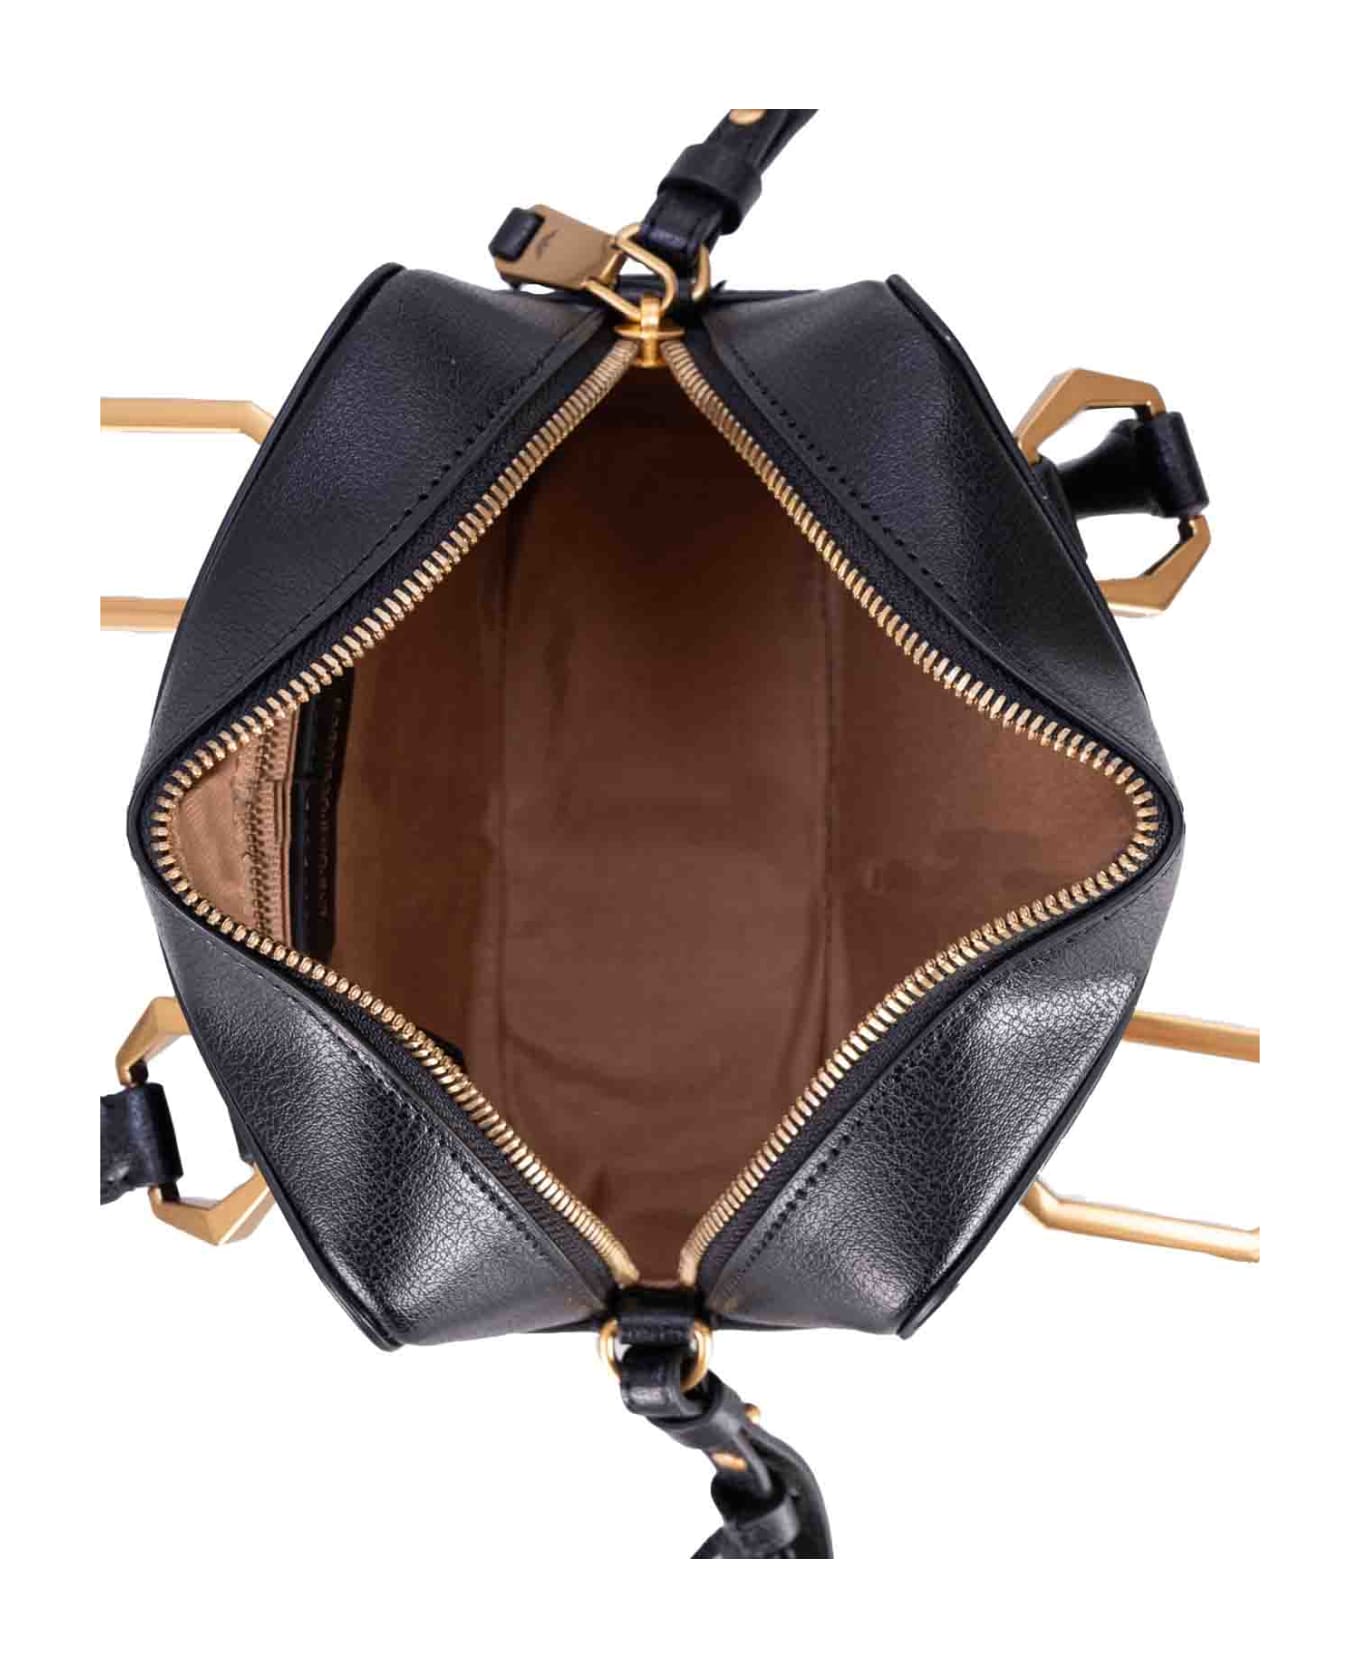 Emporio Armani Leather Bag - Black トートバッグ